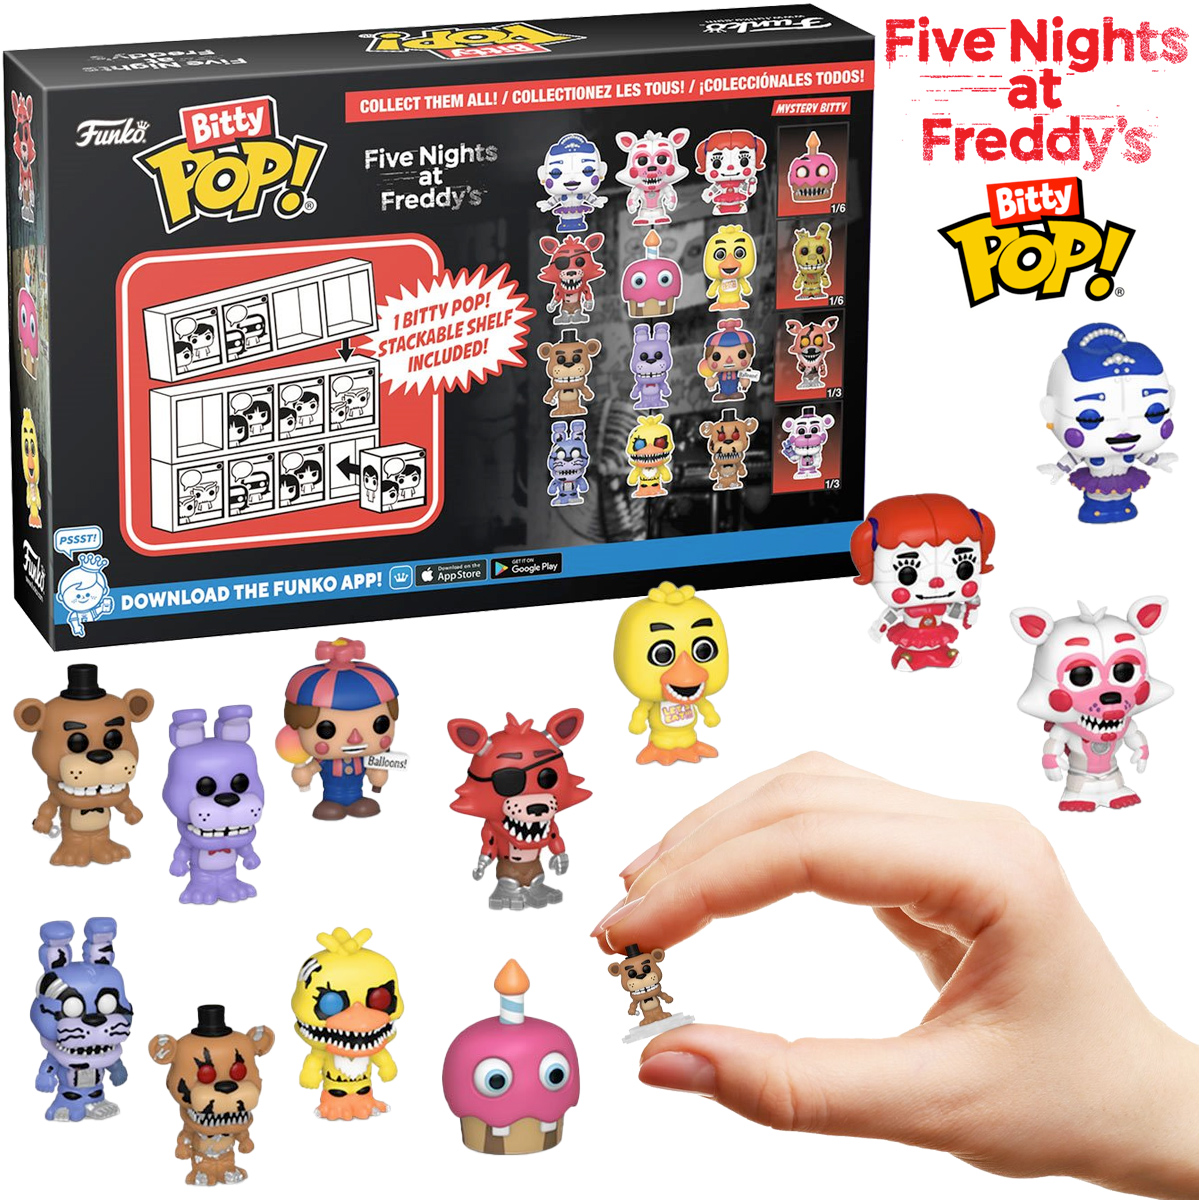  Funko Five Nights at Freddy's 4 Figure Pack(1 Set), 2